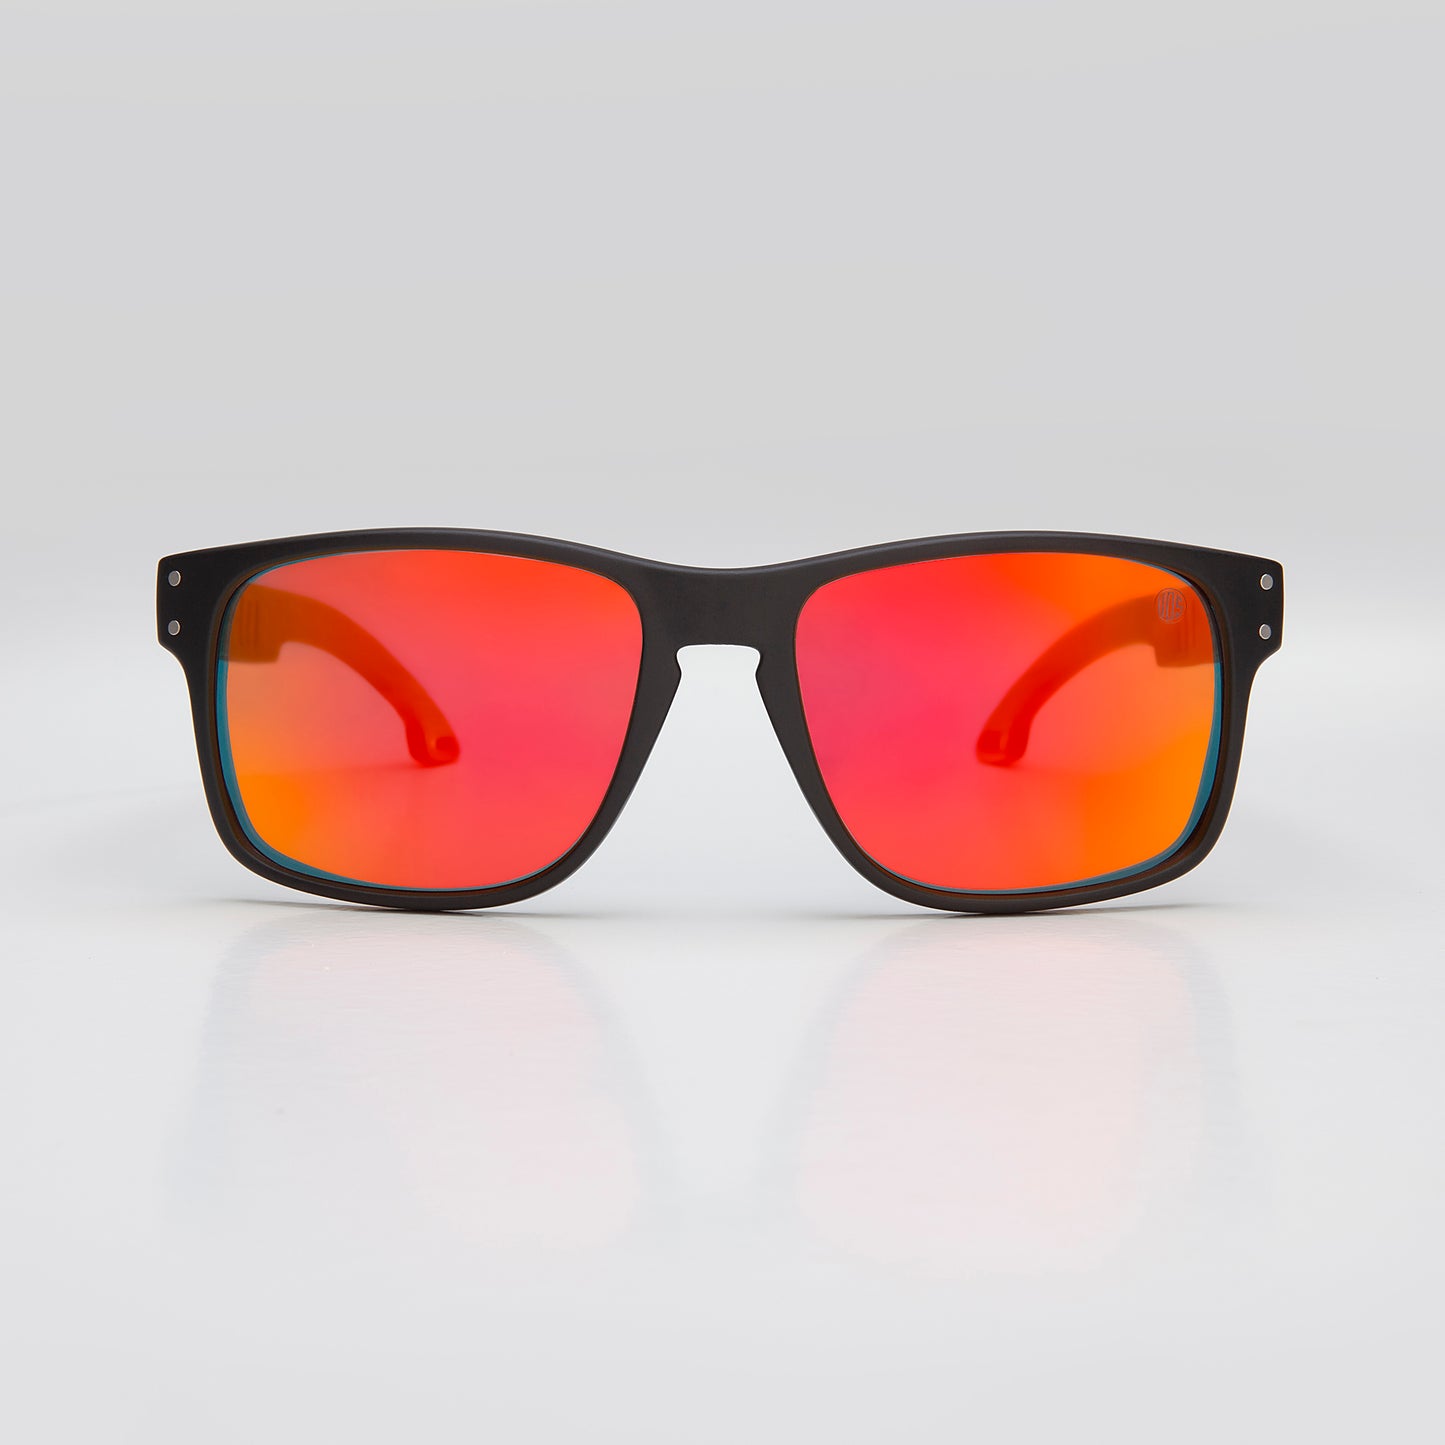 Eco Friendly sunglasses. Red Polarised Lens